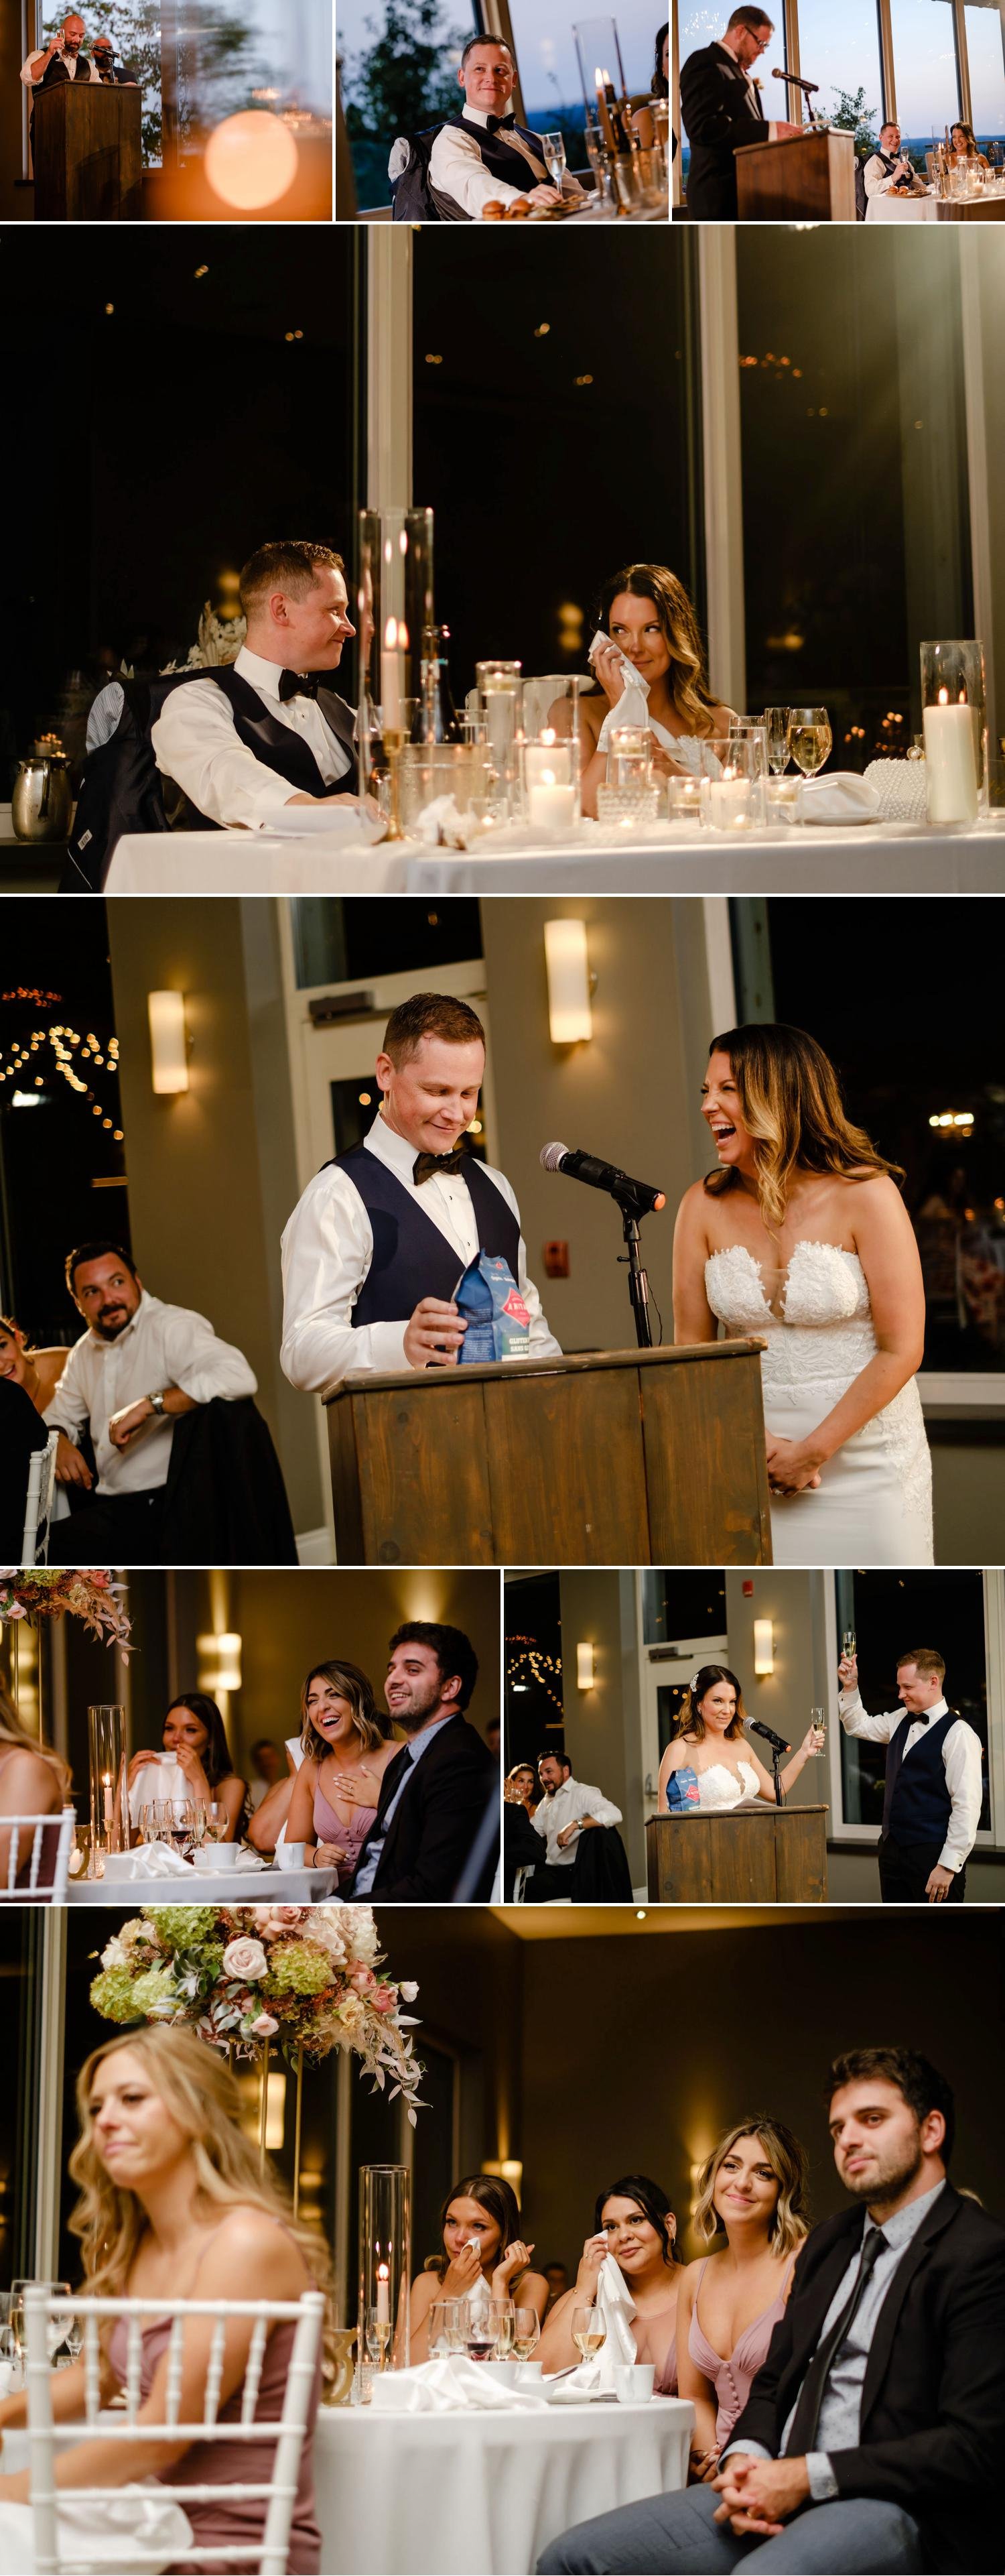 photos from a le belvedere wedding reception